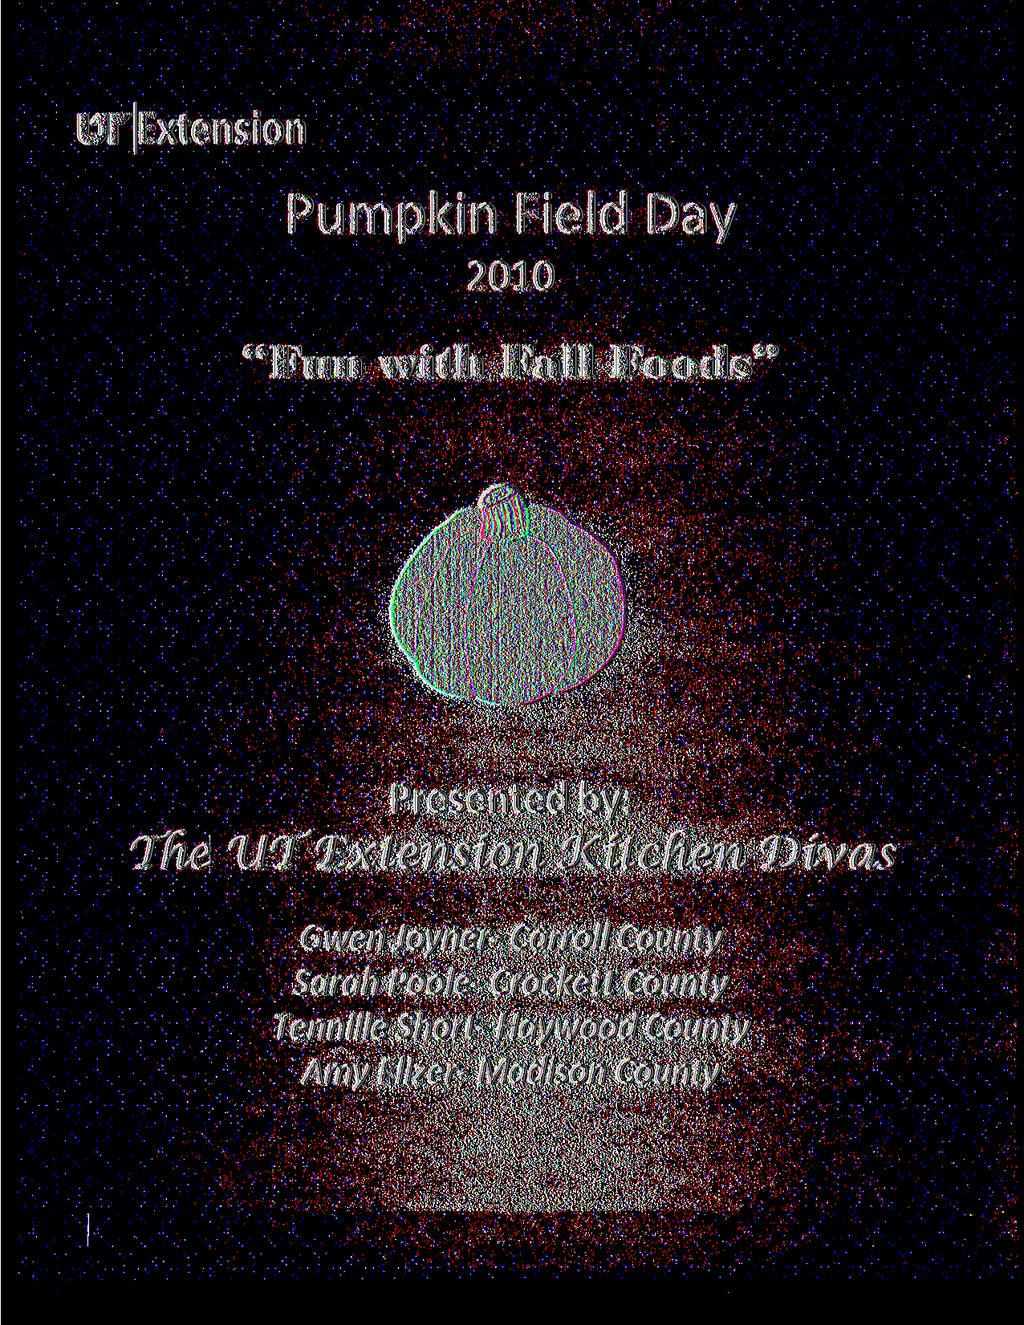 Ur Extension Pumpkin Field Day 2010 "Fun with I all Foods" Presented by: IdT'Extension Kitchen Vivas Gwen